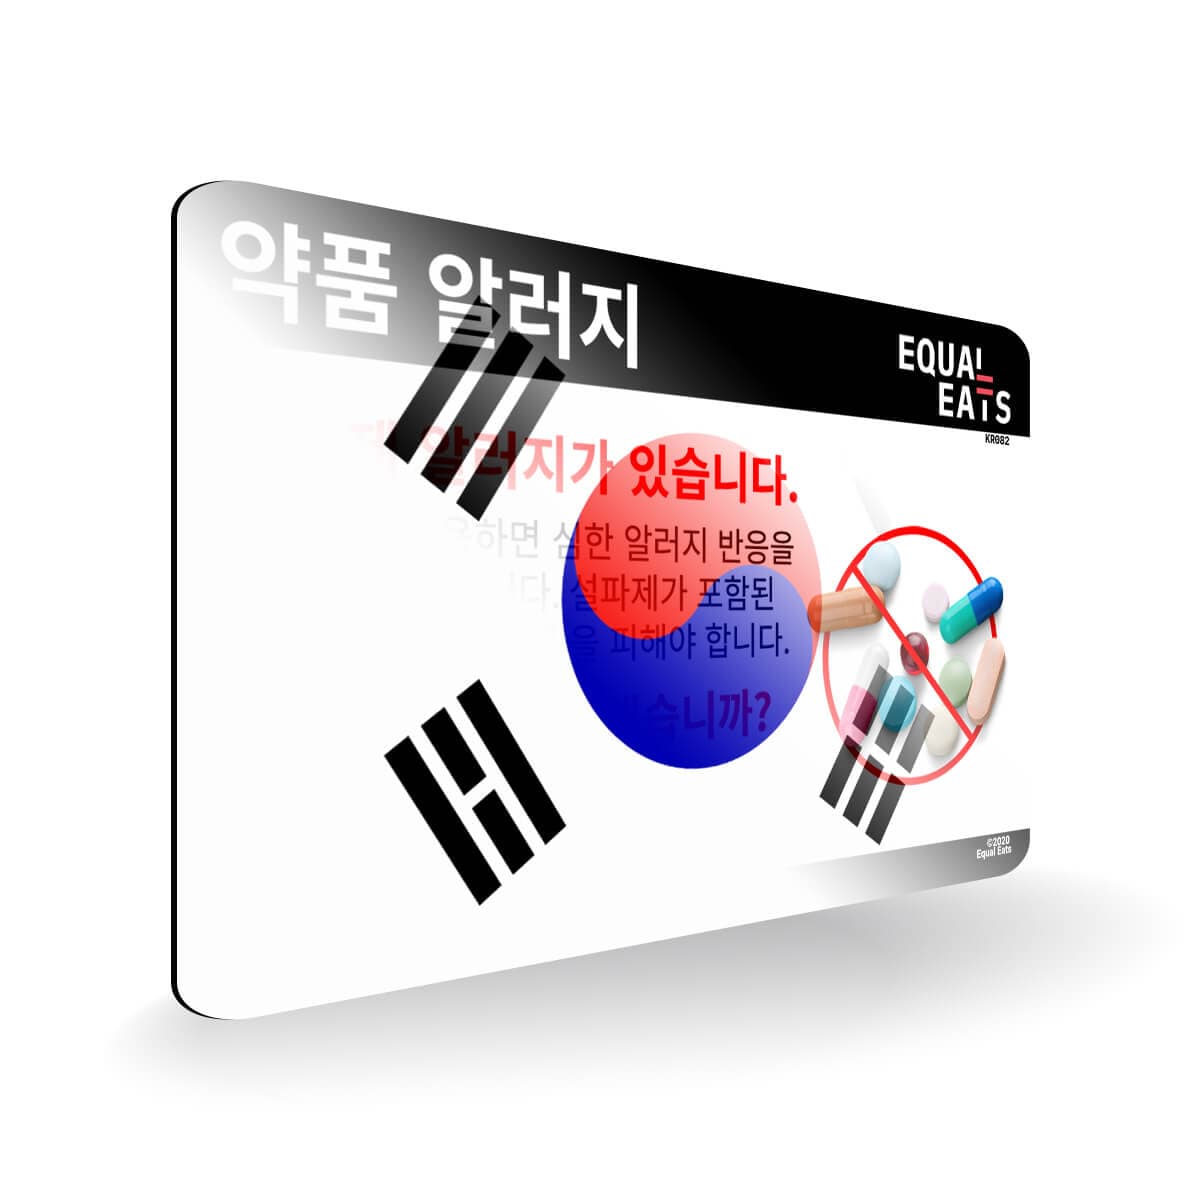 Sulfa Allergy in Korean. Sulfa Medicine Allergy Card for Korea